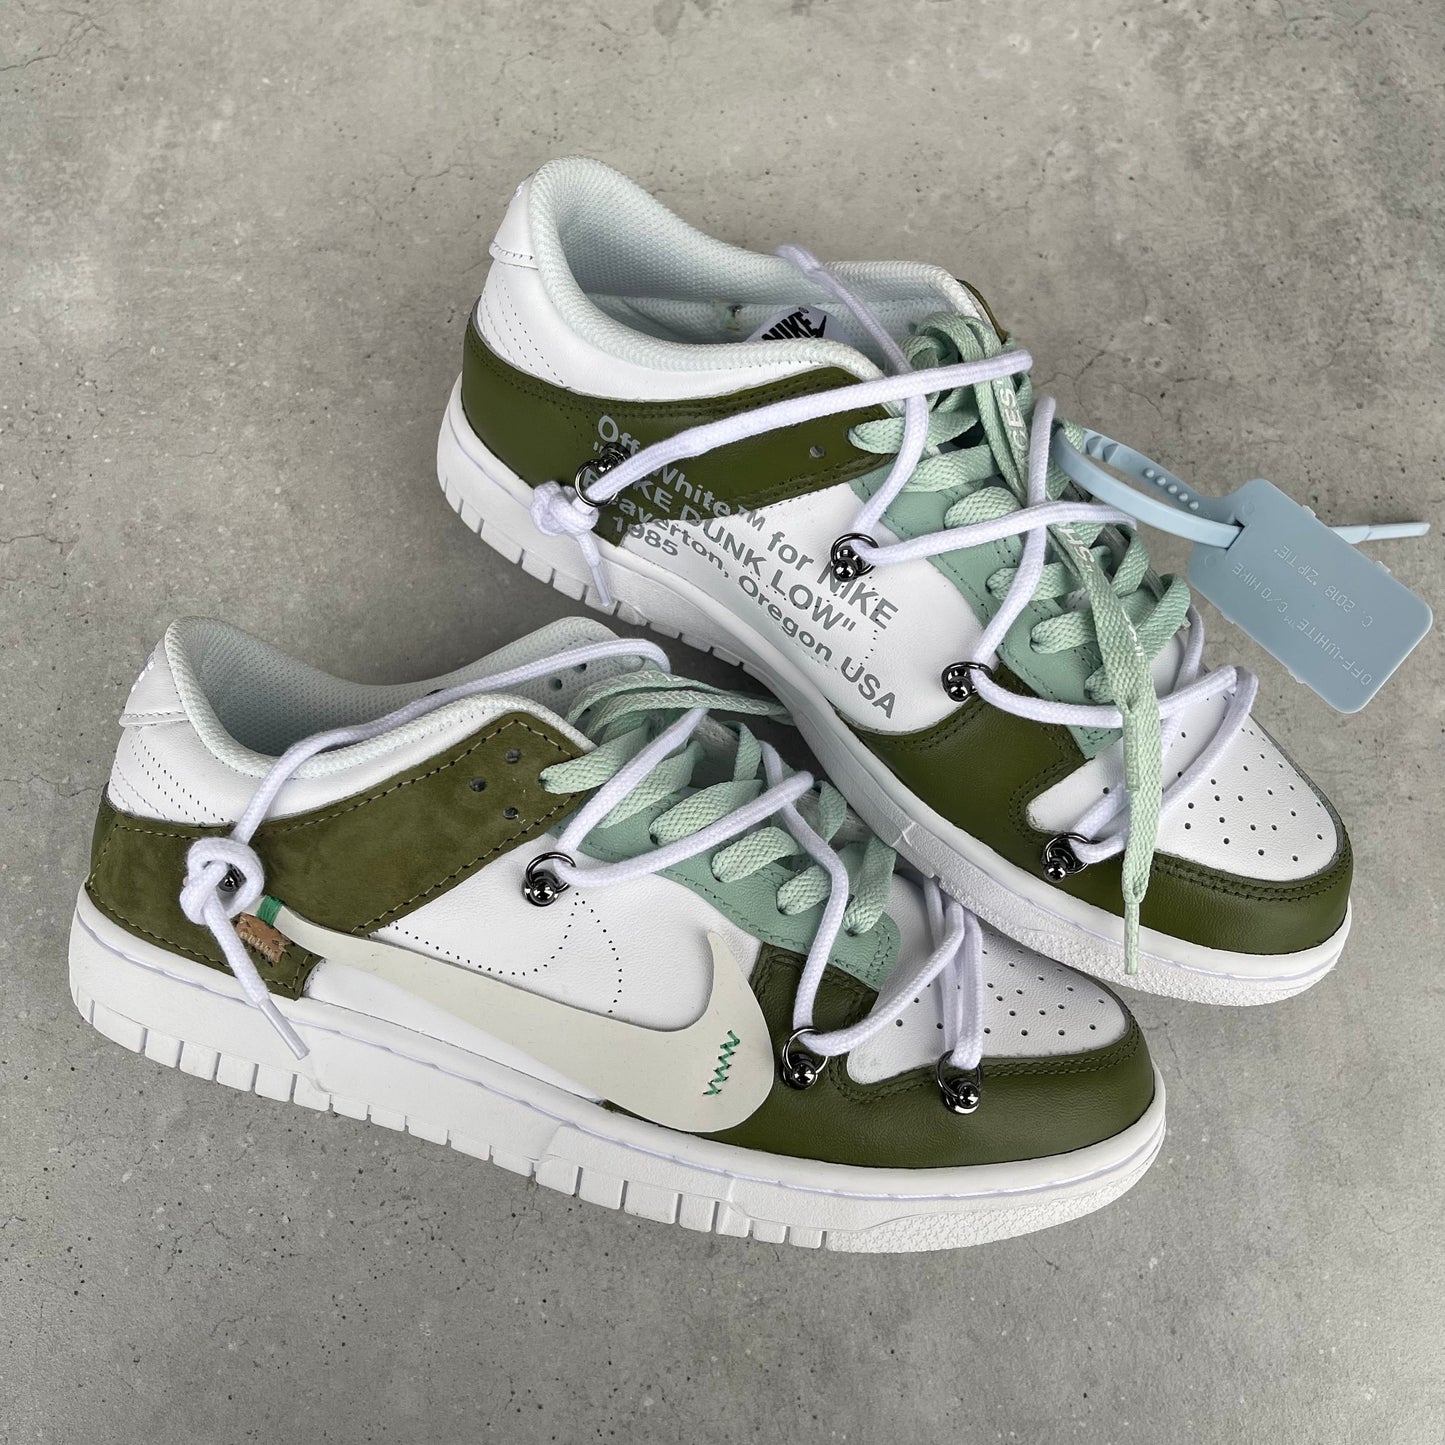 Custom Nike Dunk low - OFF-WHITE lot (dark green)